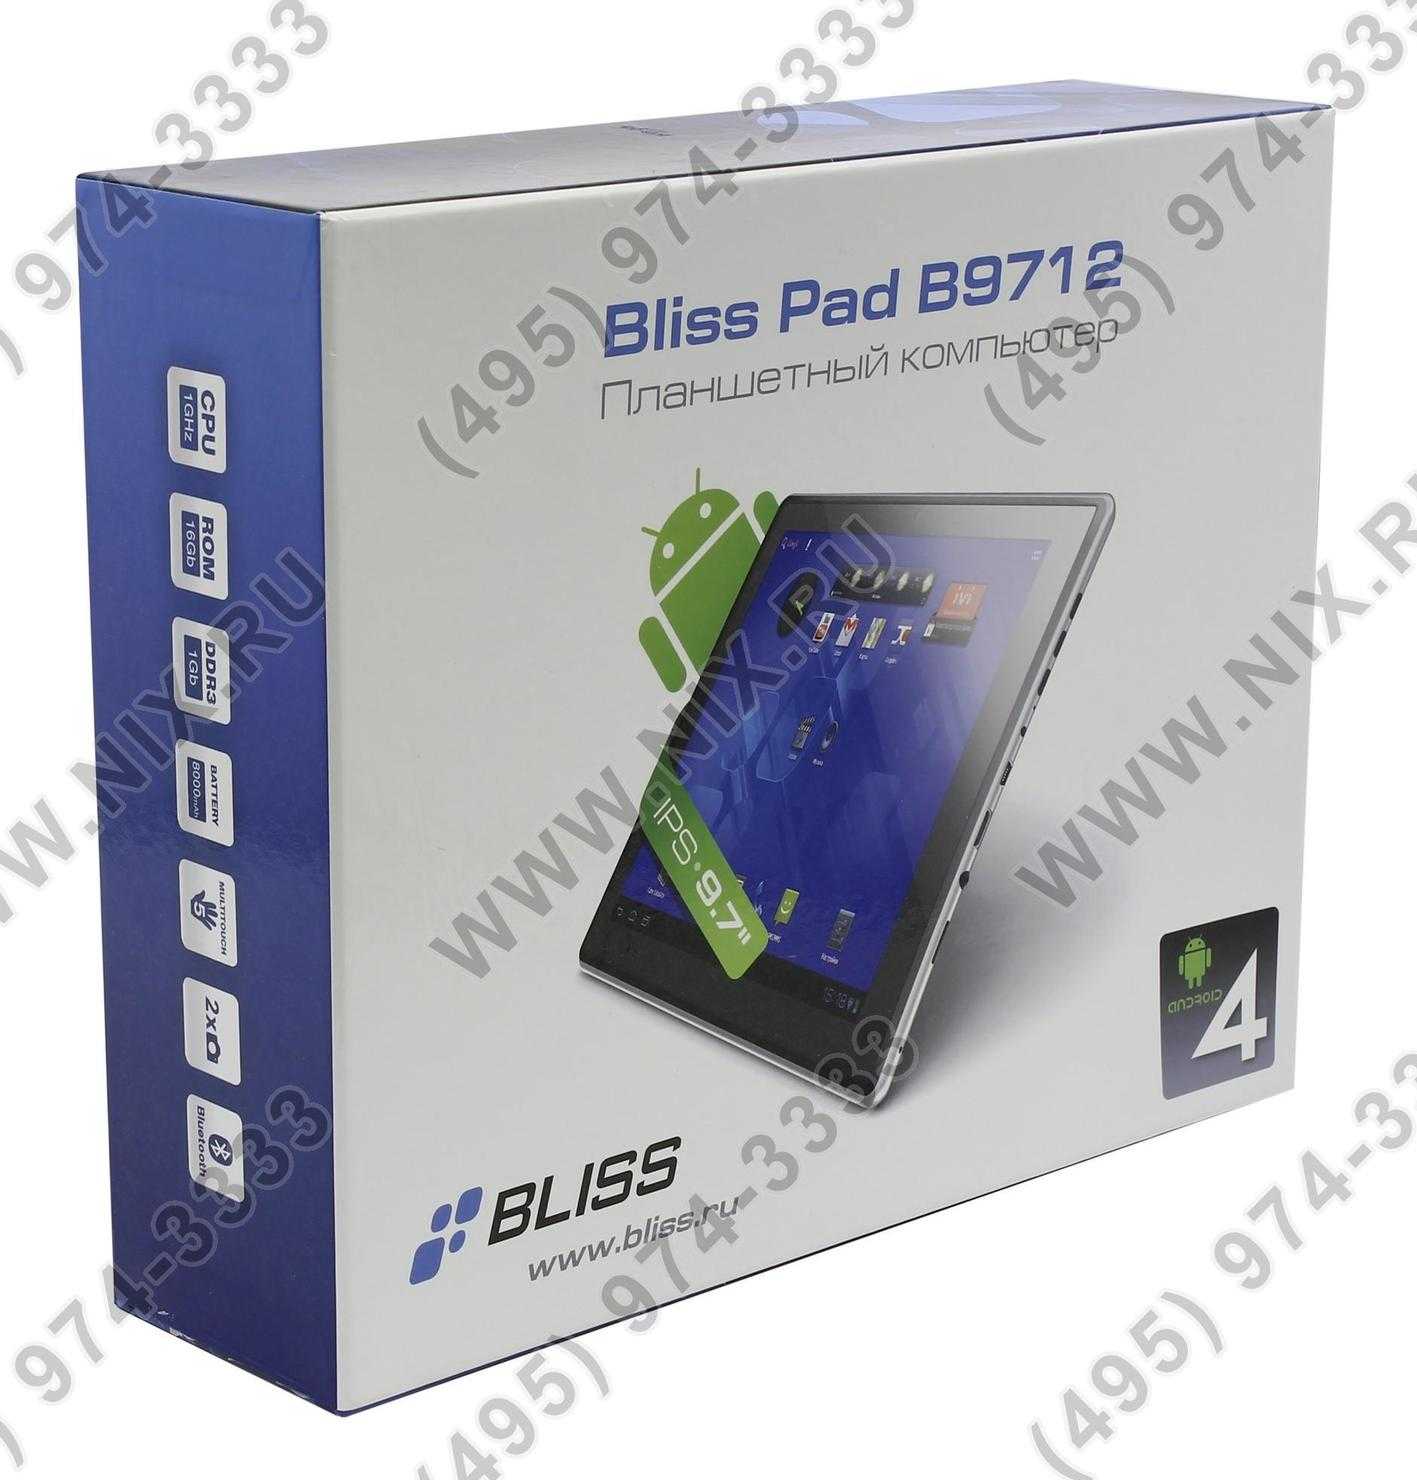 Bliss pad r9011